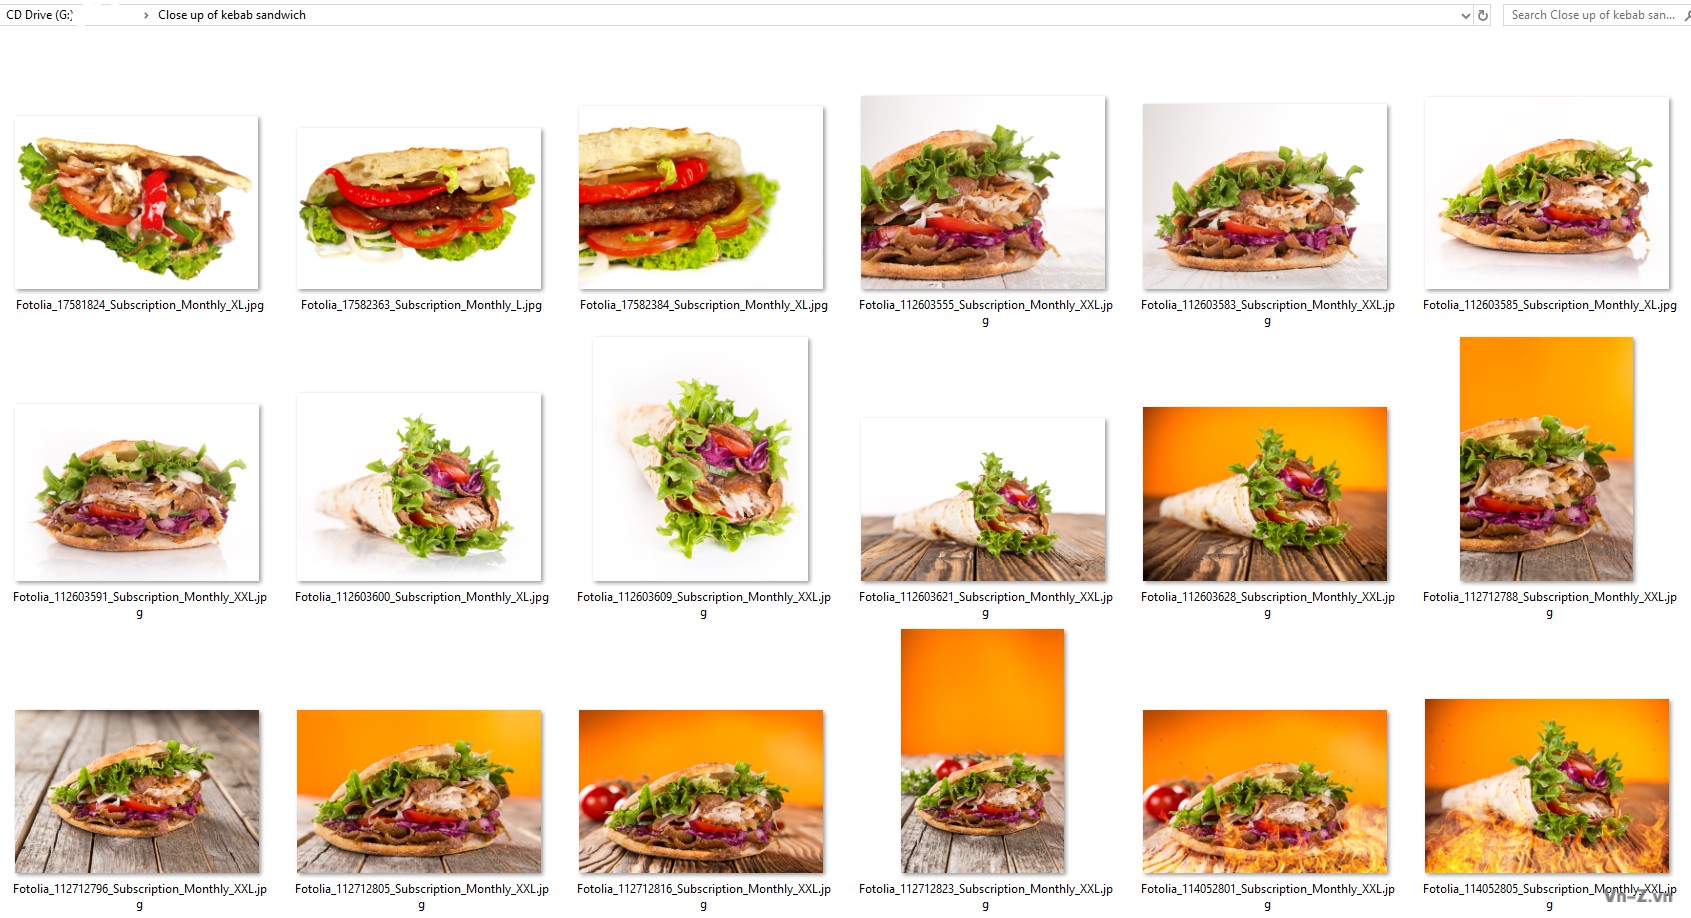 054-Close-up-of-kebab-sandwich.jpg